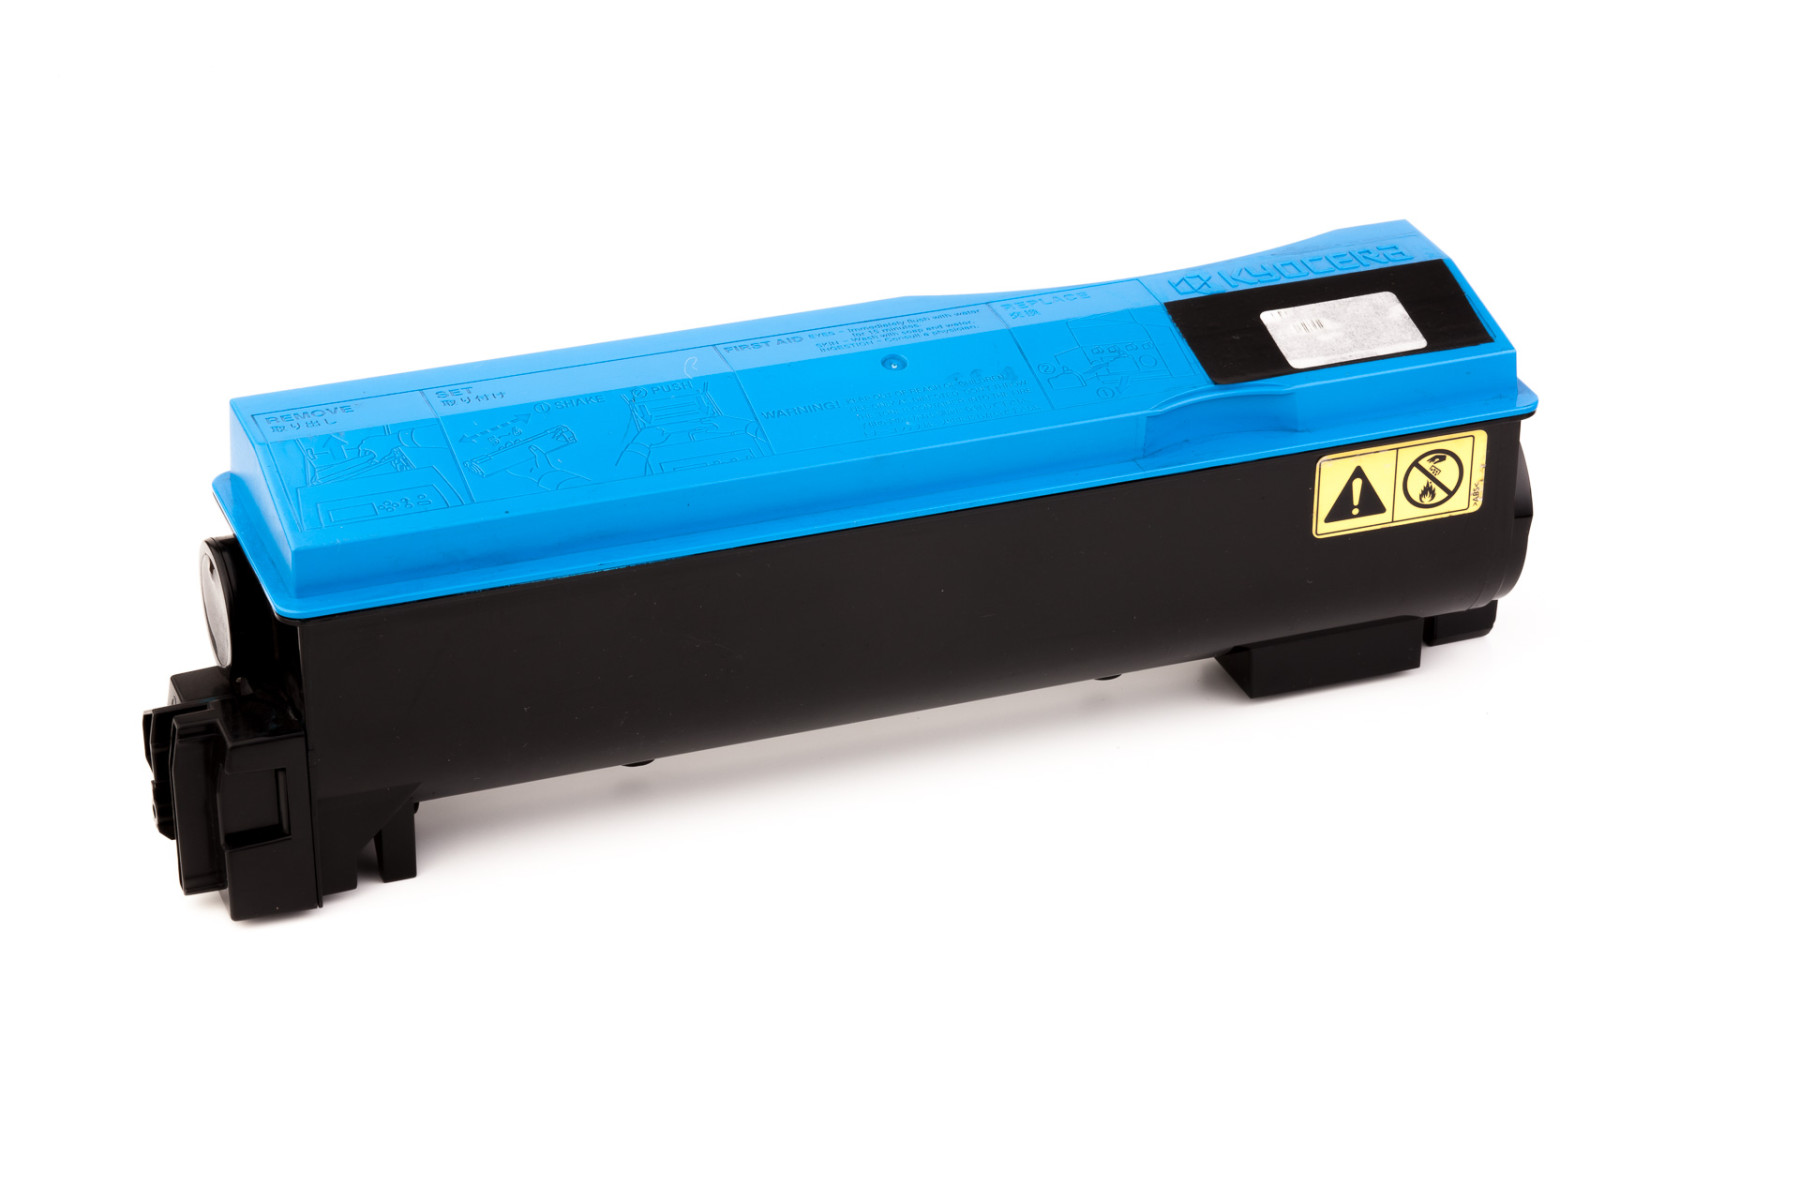 Set consisting of Toner cartridge (alternative) compatible with Kyocera/Mita FS-C 5400 DN // TK570K / TK 570 K black, TK570C / TK 570 C cyan, TK570M / TK 570 M magenta, TK570Y / TK 570 Y yellow - Save 6%